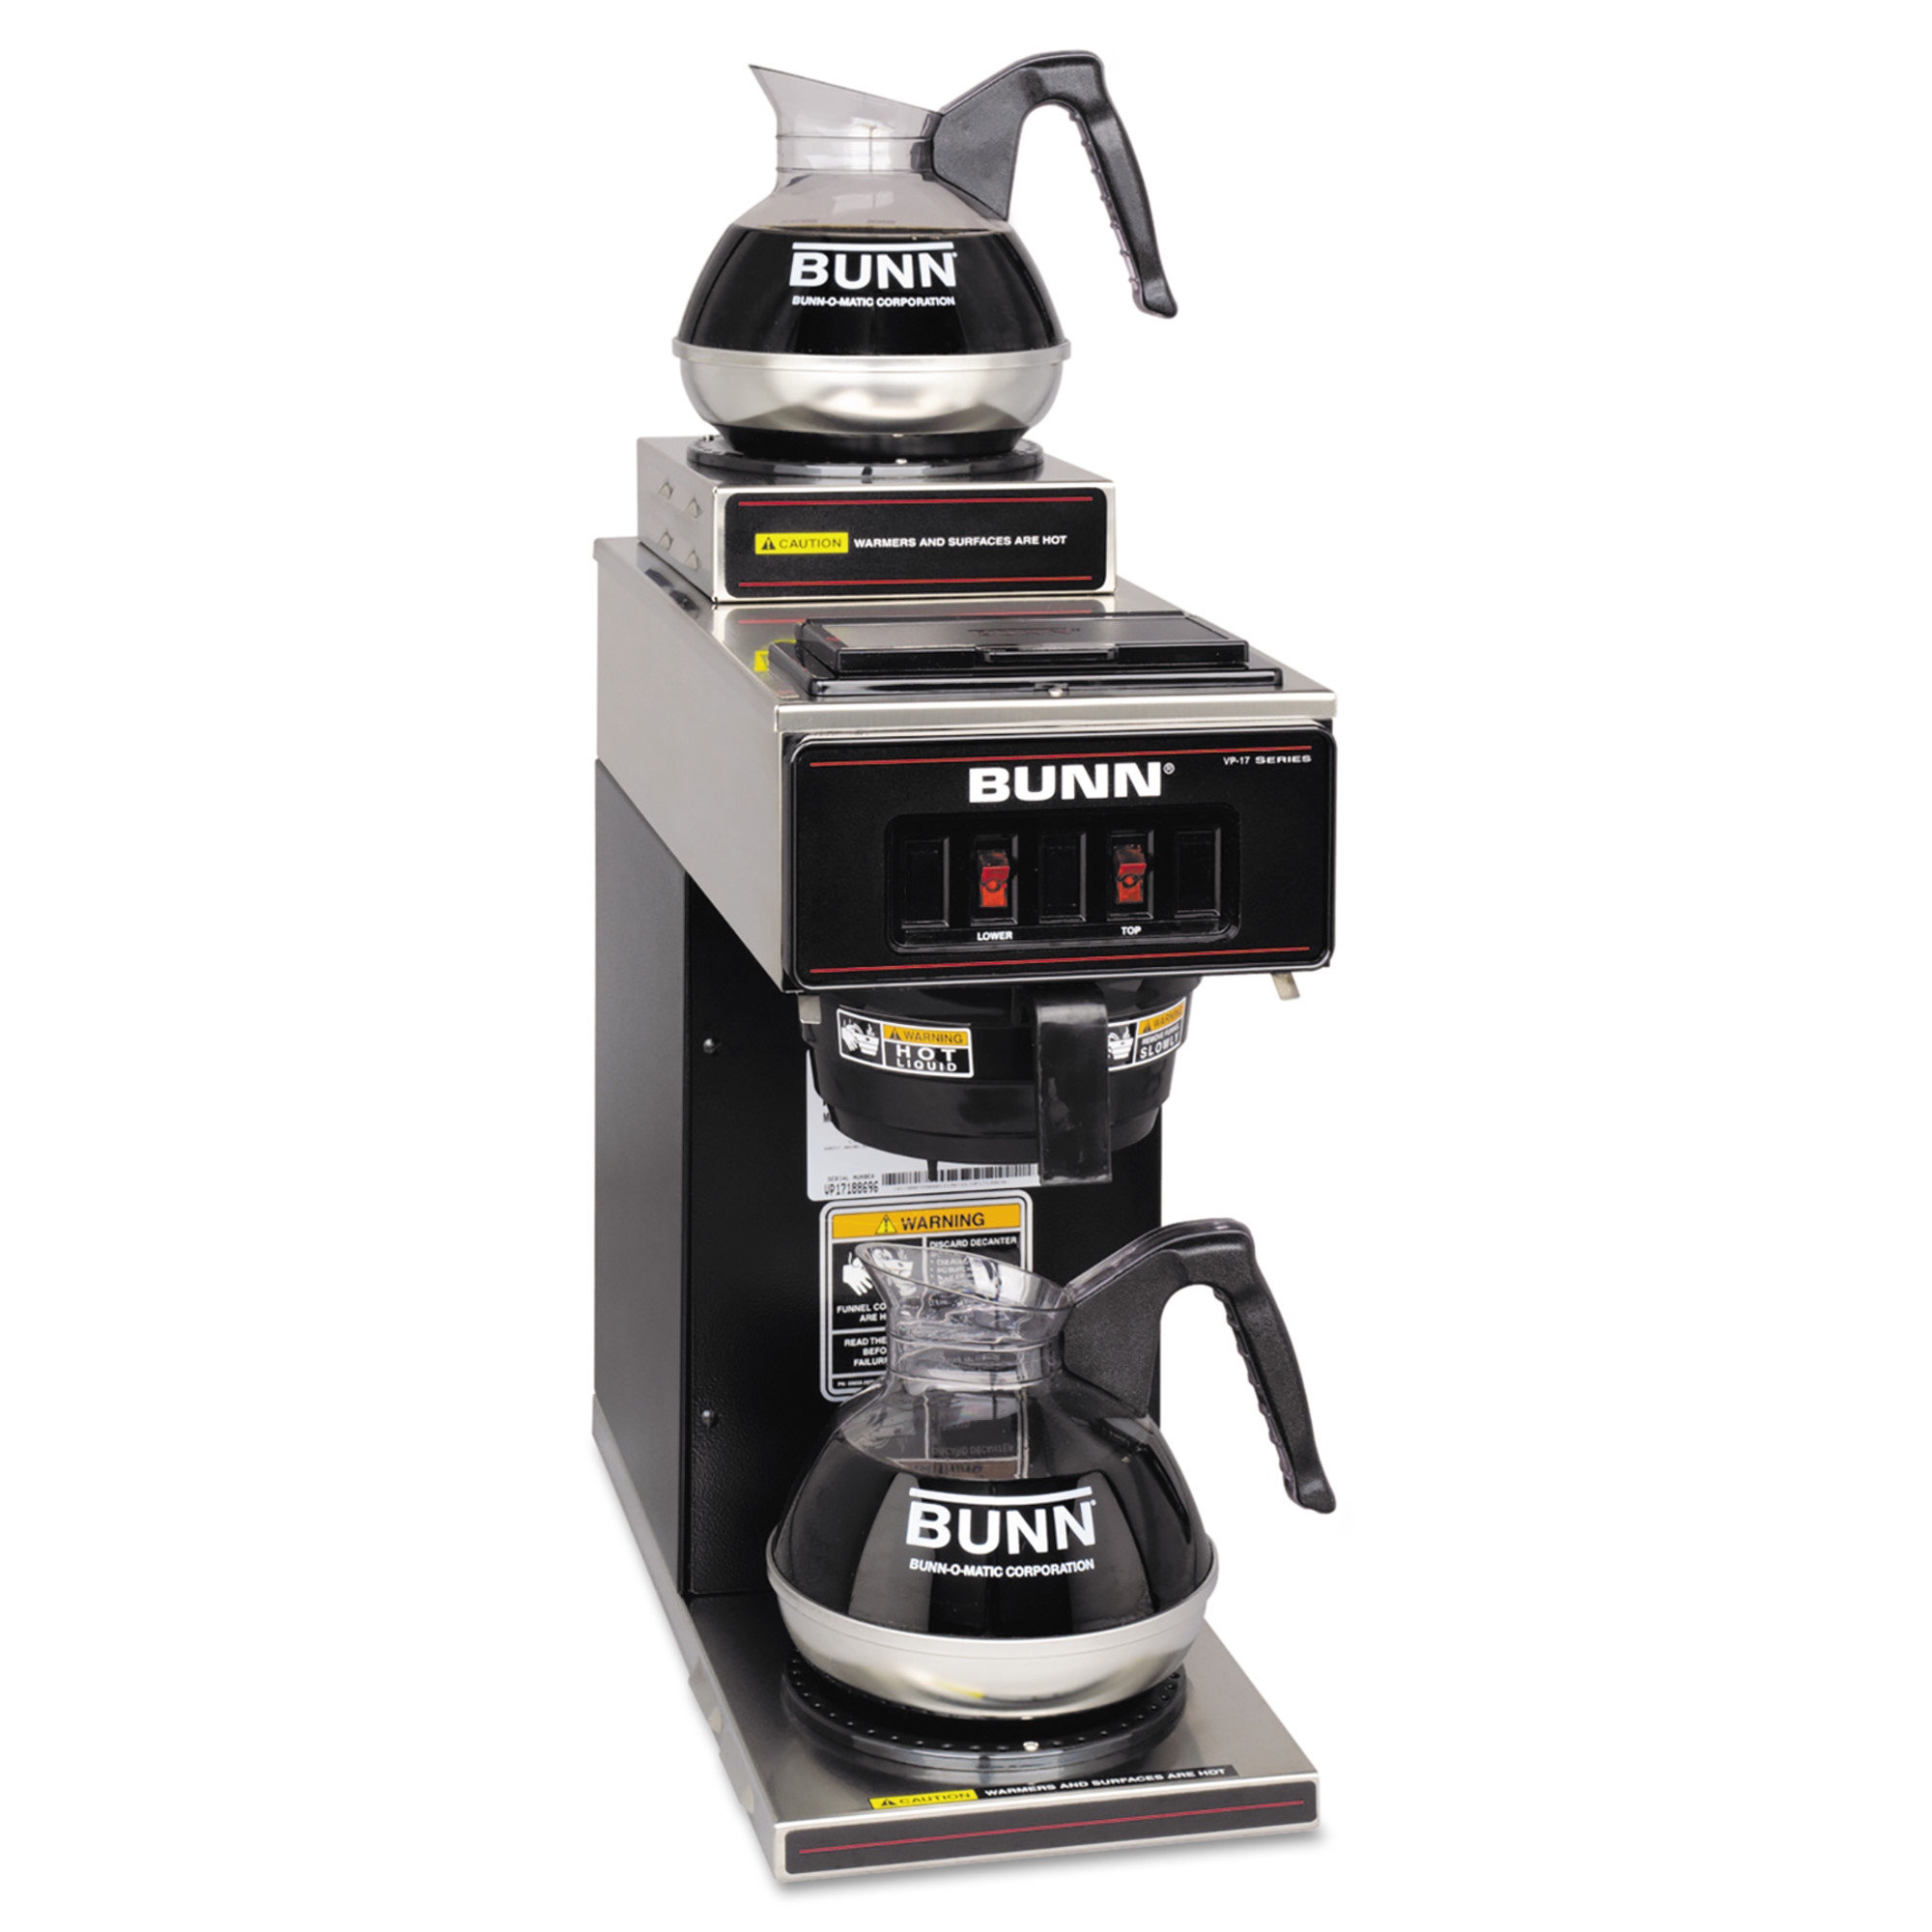 Bunn Commercial Coffee Maker, Model C-12, Bunn-O-Matic, No Filter Basket,  Works